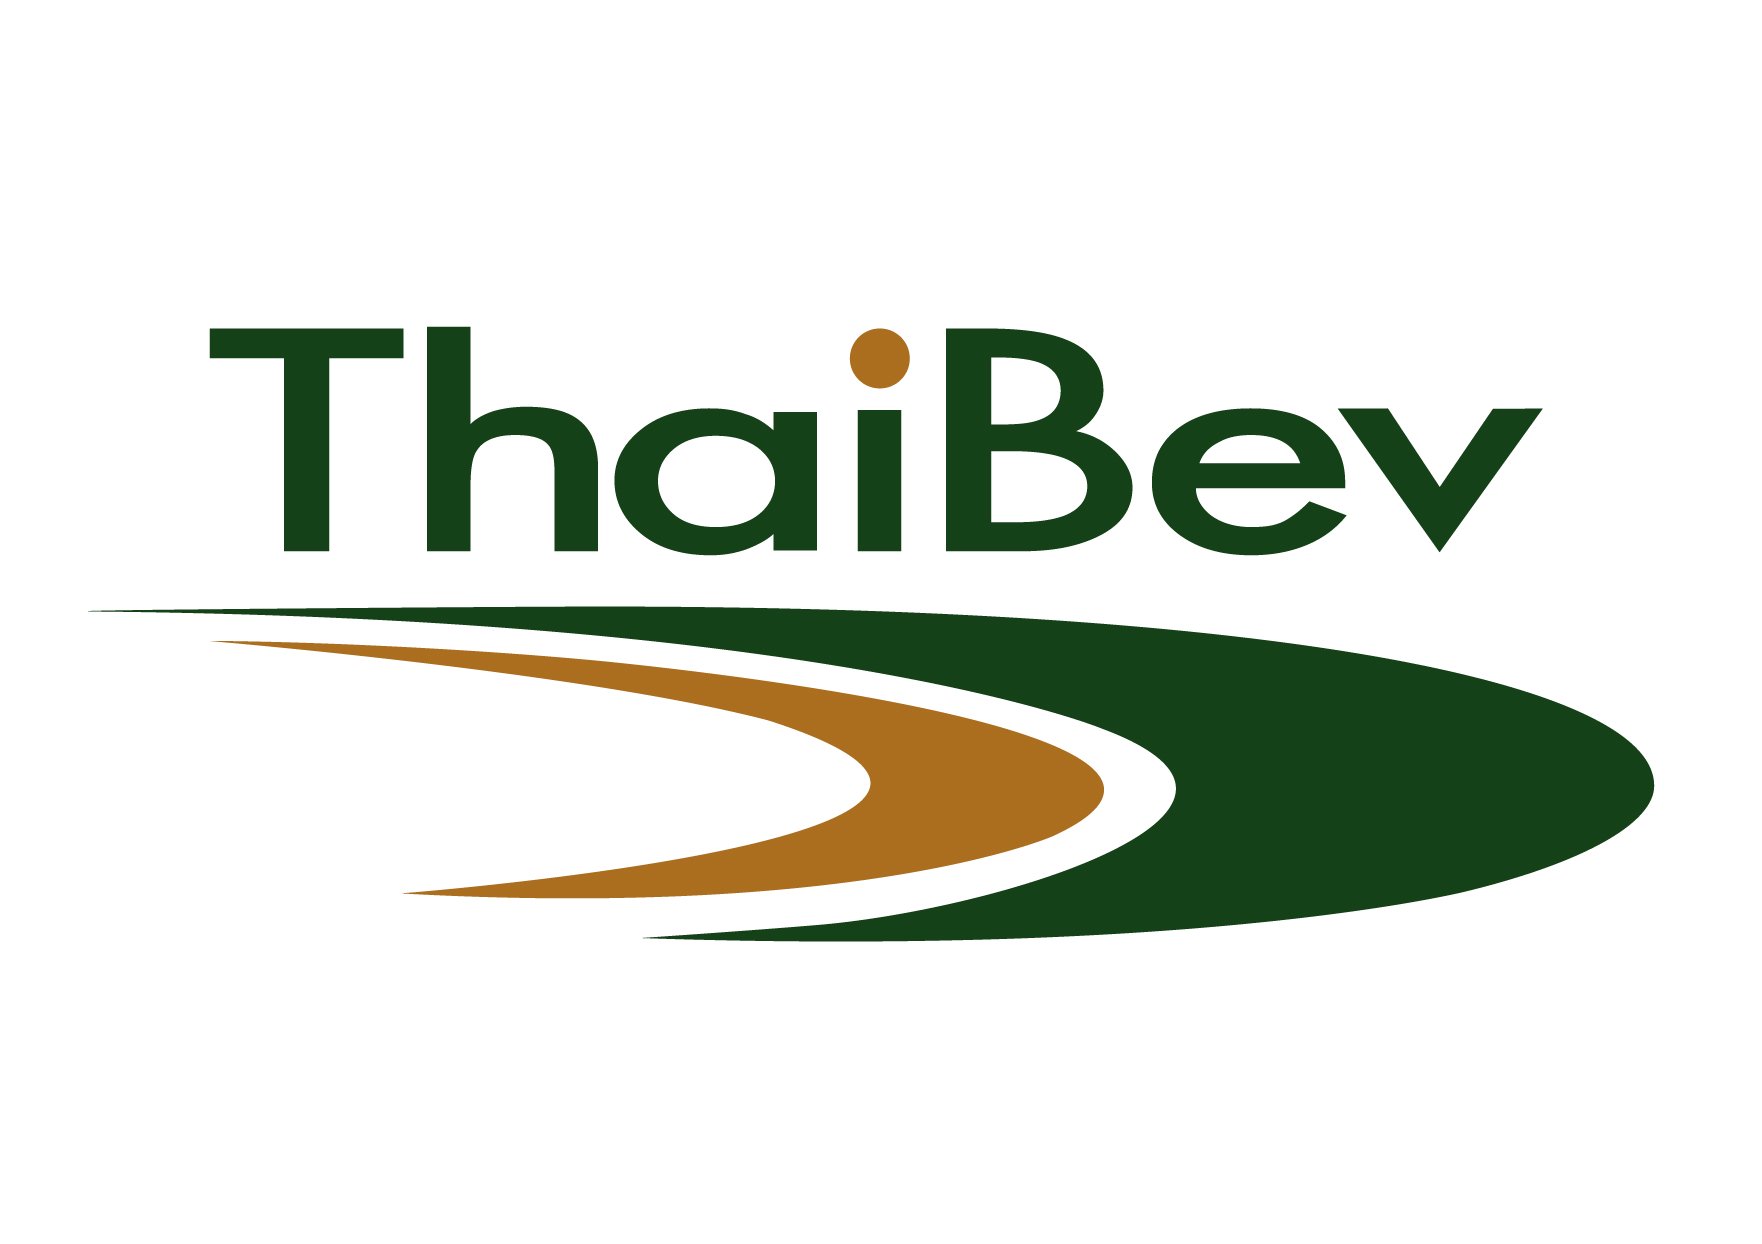 Thai Beverage: Spirits uplift